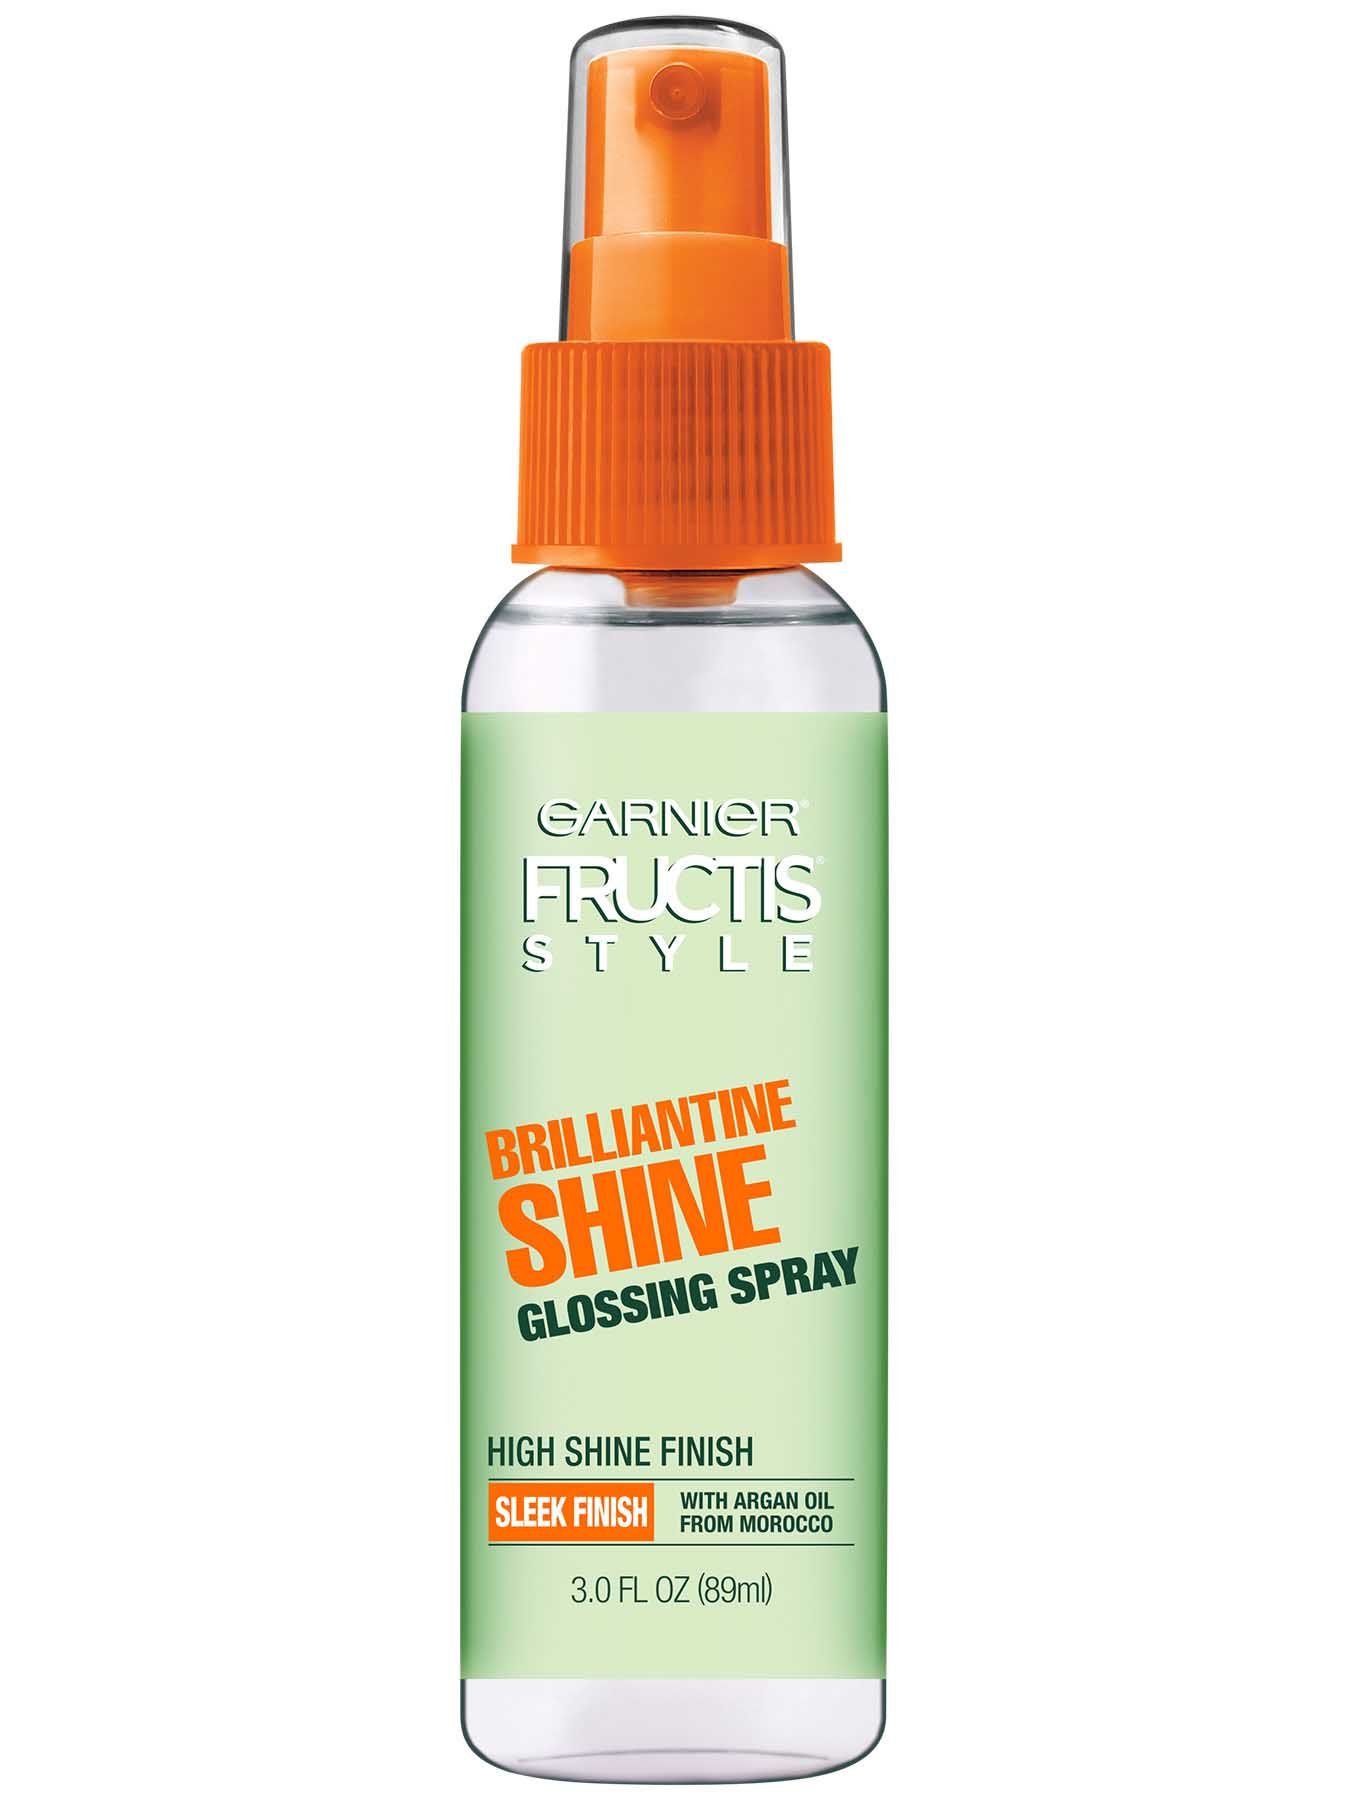 Front view of Brilliantine Shine Glossy Spray.